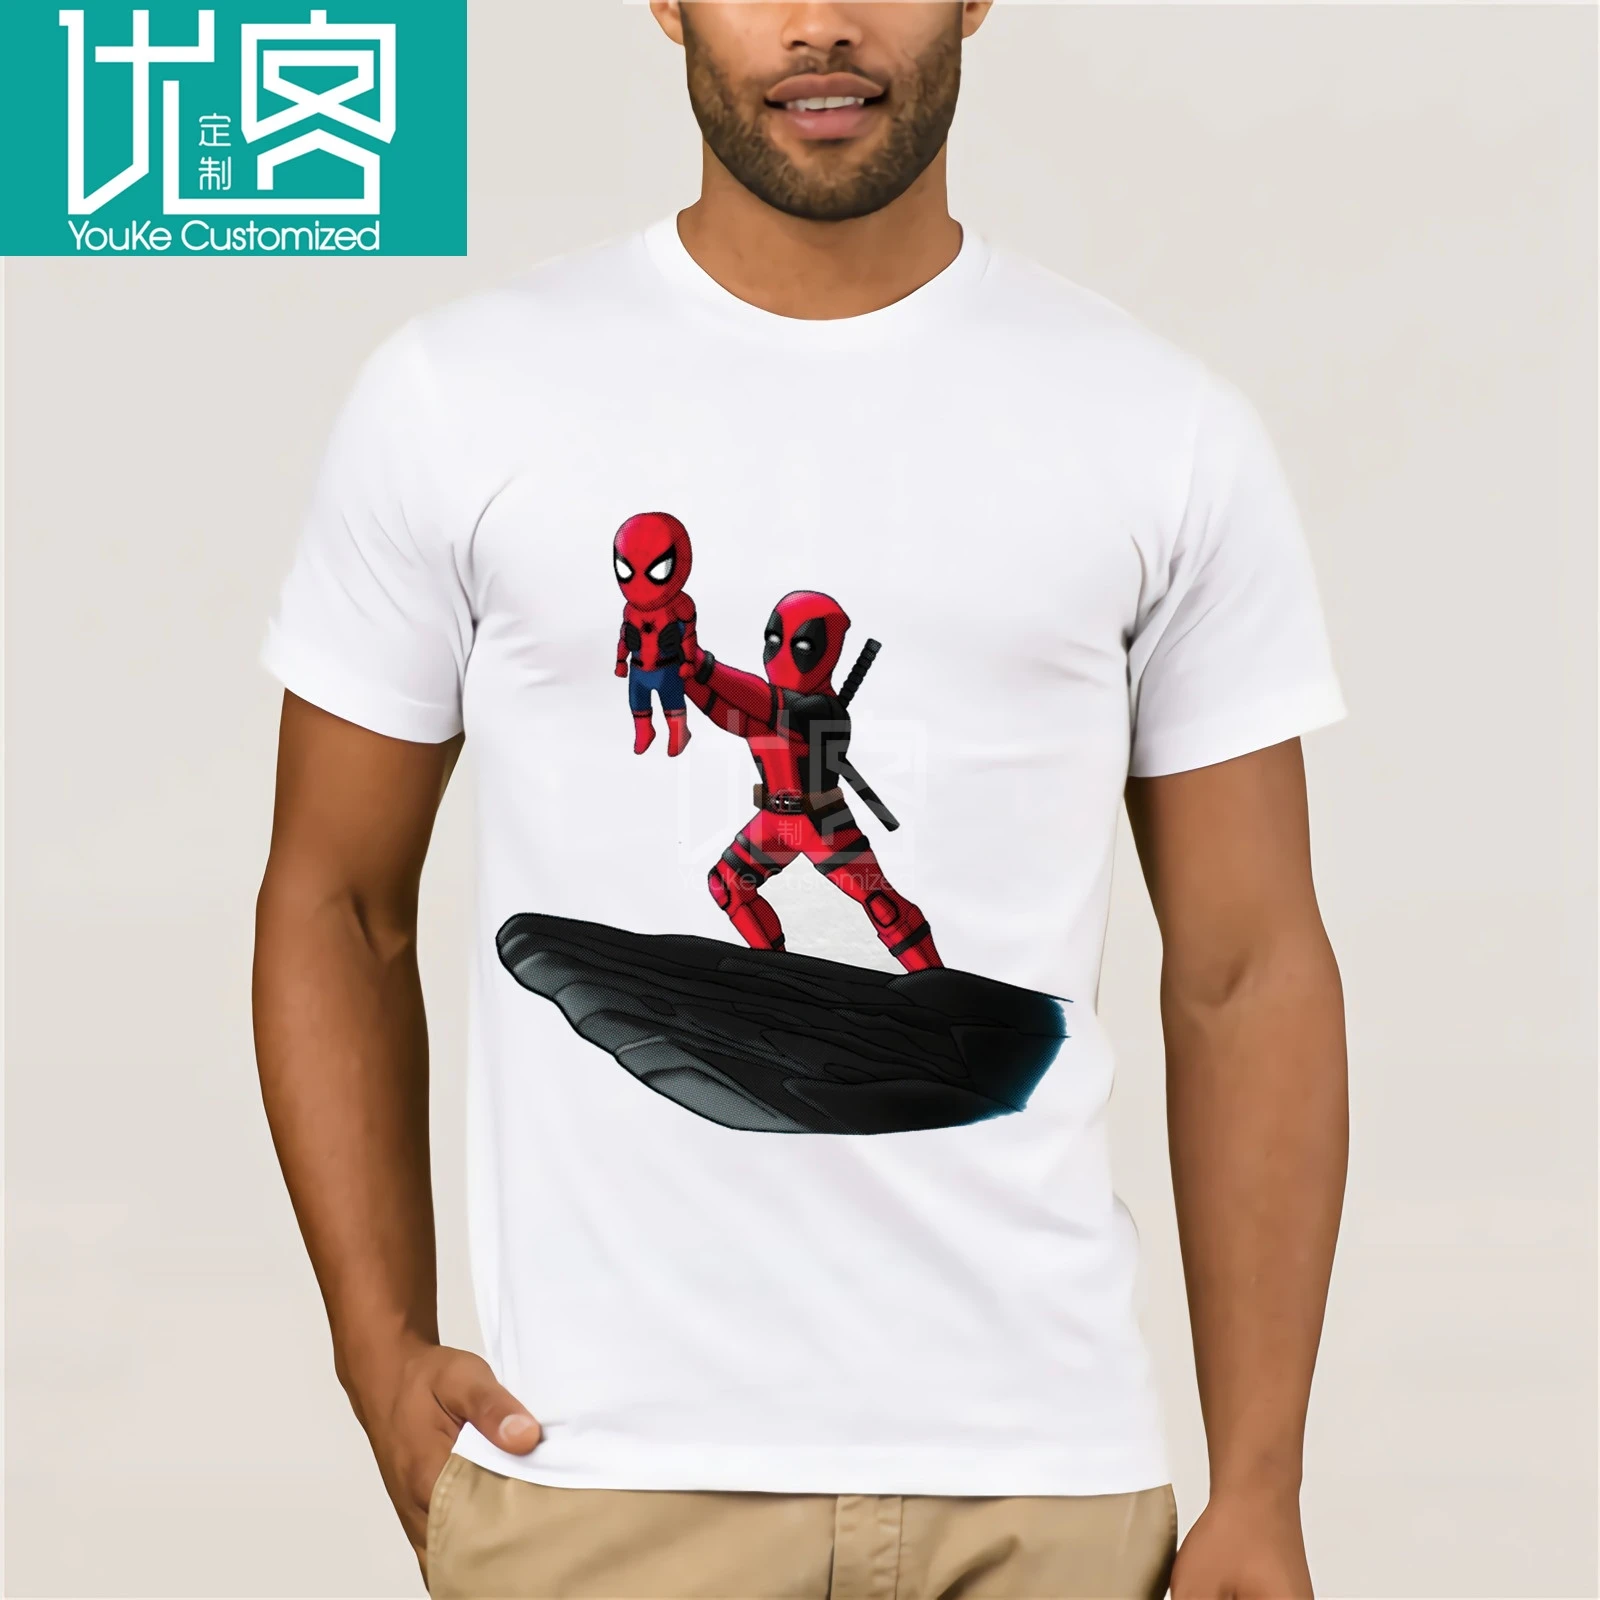 

Deadpool T Shirt,Spiderman Lion King Spoof,Marvel Comics Adult And Kids Sizes Unisex Funny High Quality Casual Joke T Shirt